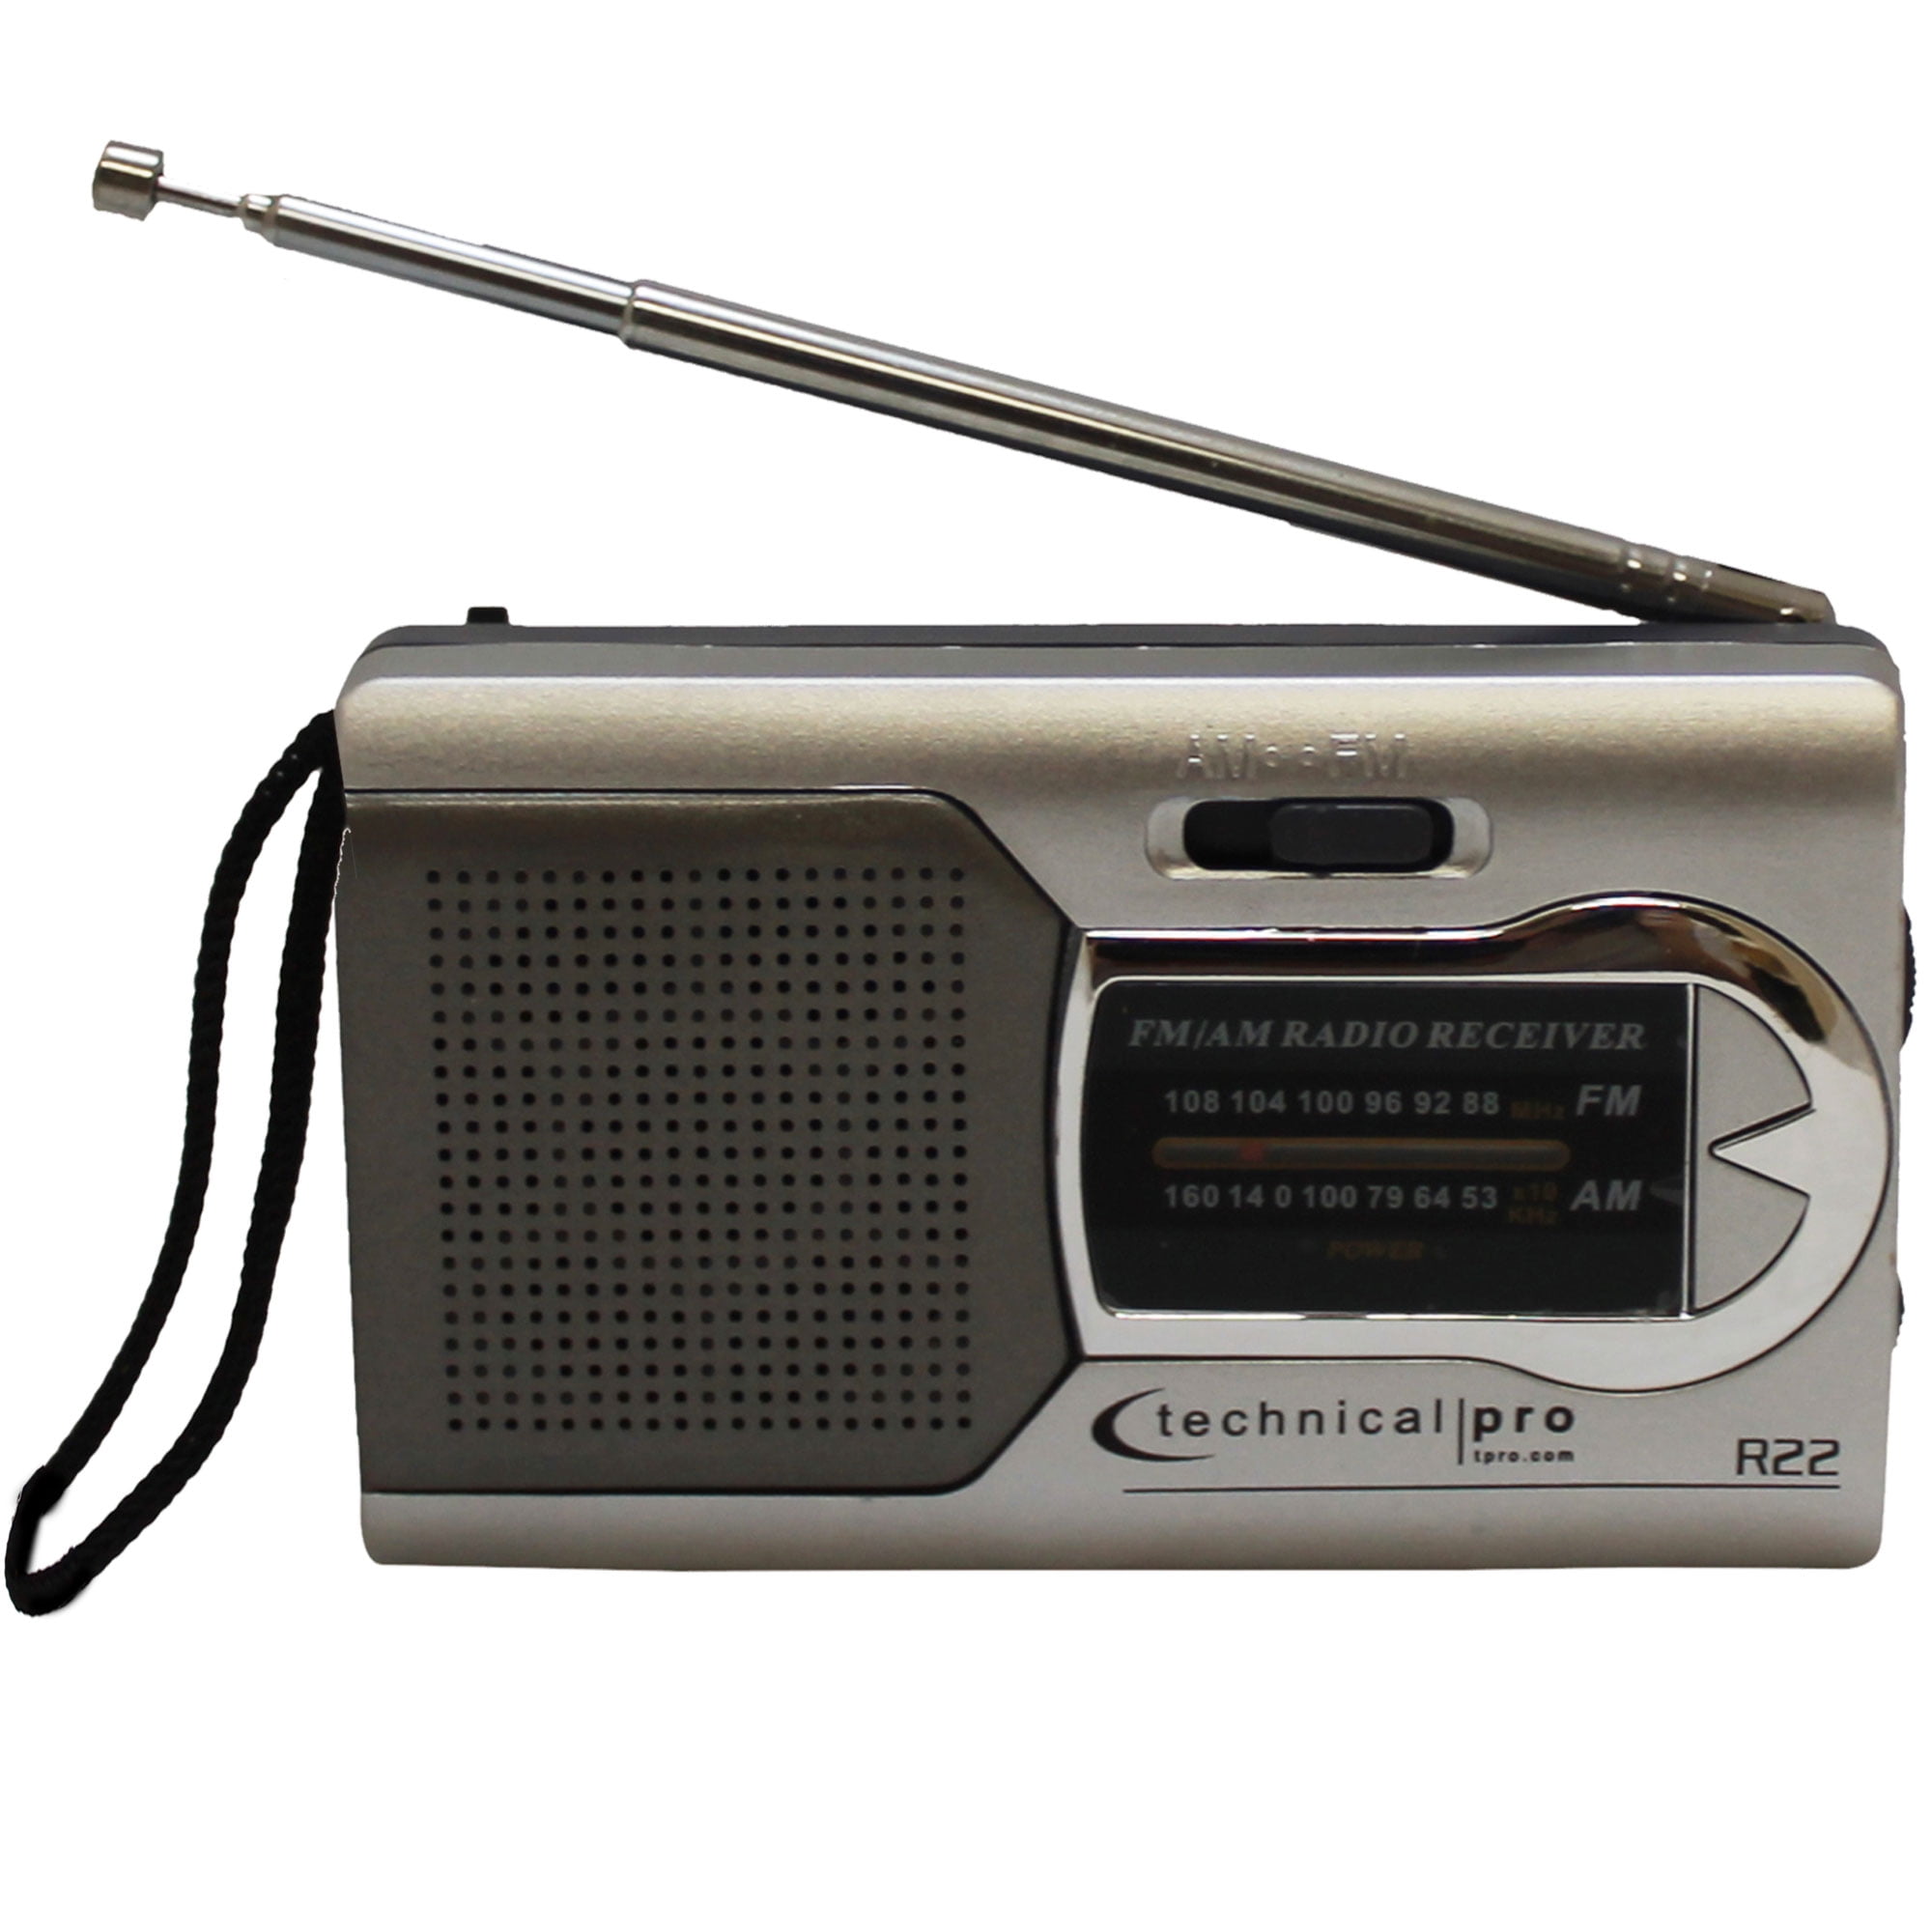 Technical Pro AM FM Radio Portable Speaker, Battery-Powered Handheld Radio  w/ Speaker Manual Tuner, Headphone Jack for 